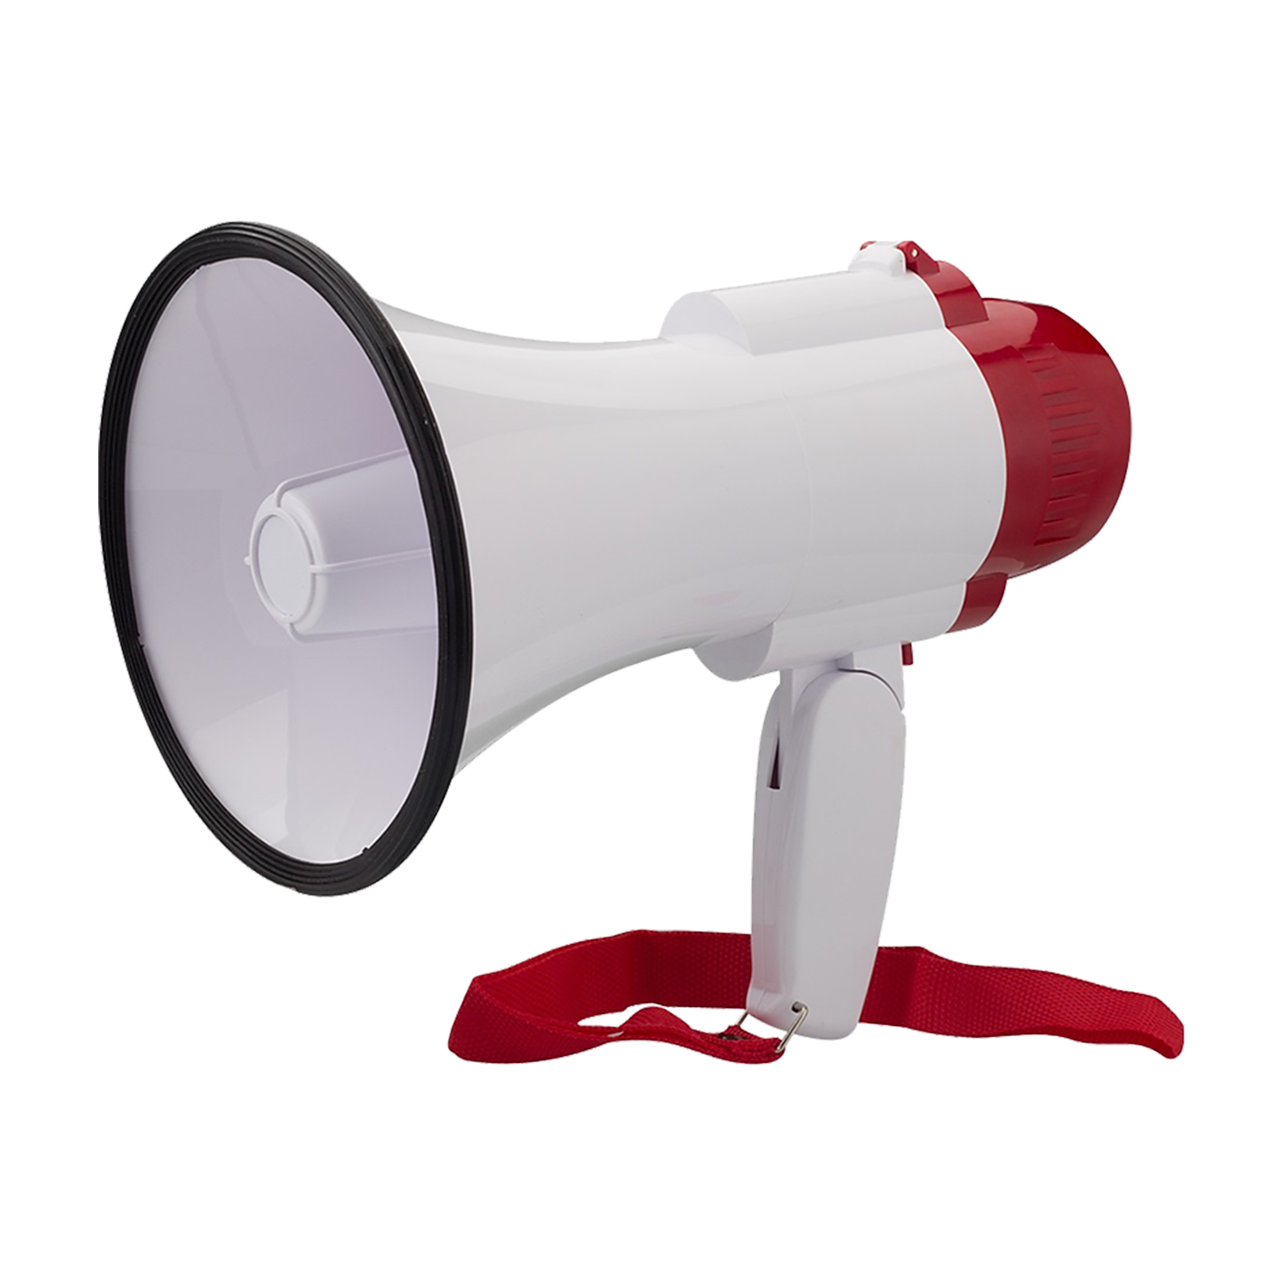 Bullhorn megaphone siren Royalty Free Vector Image